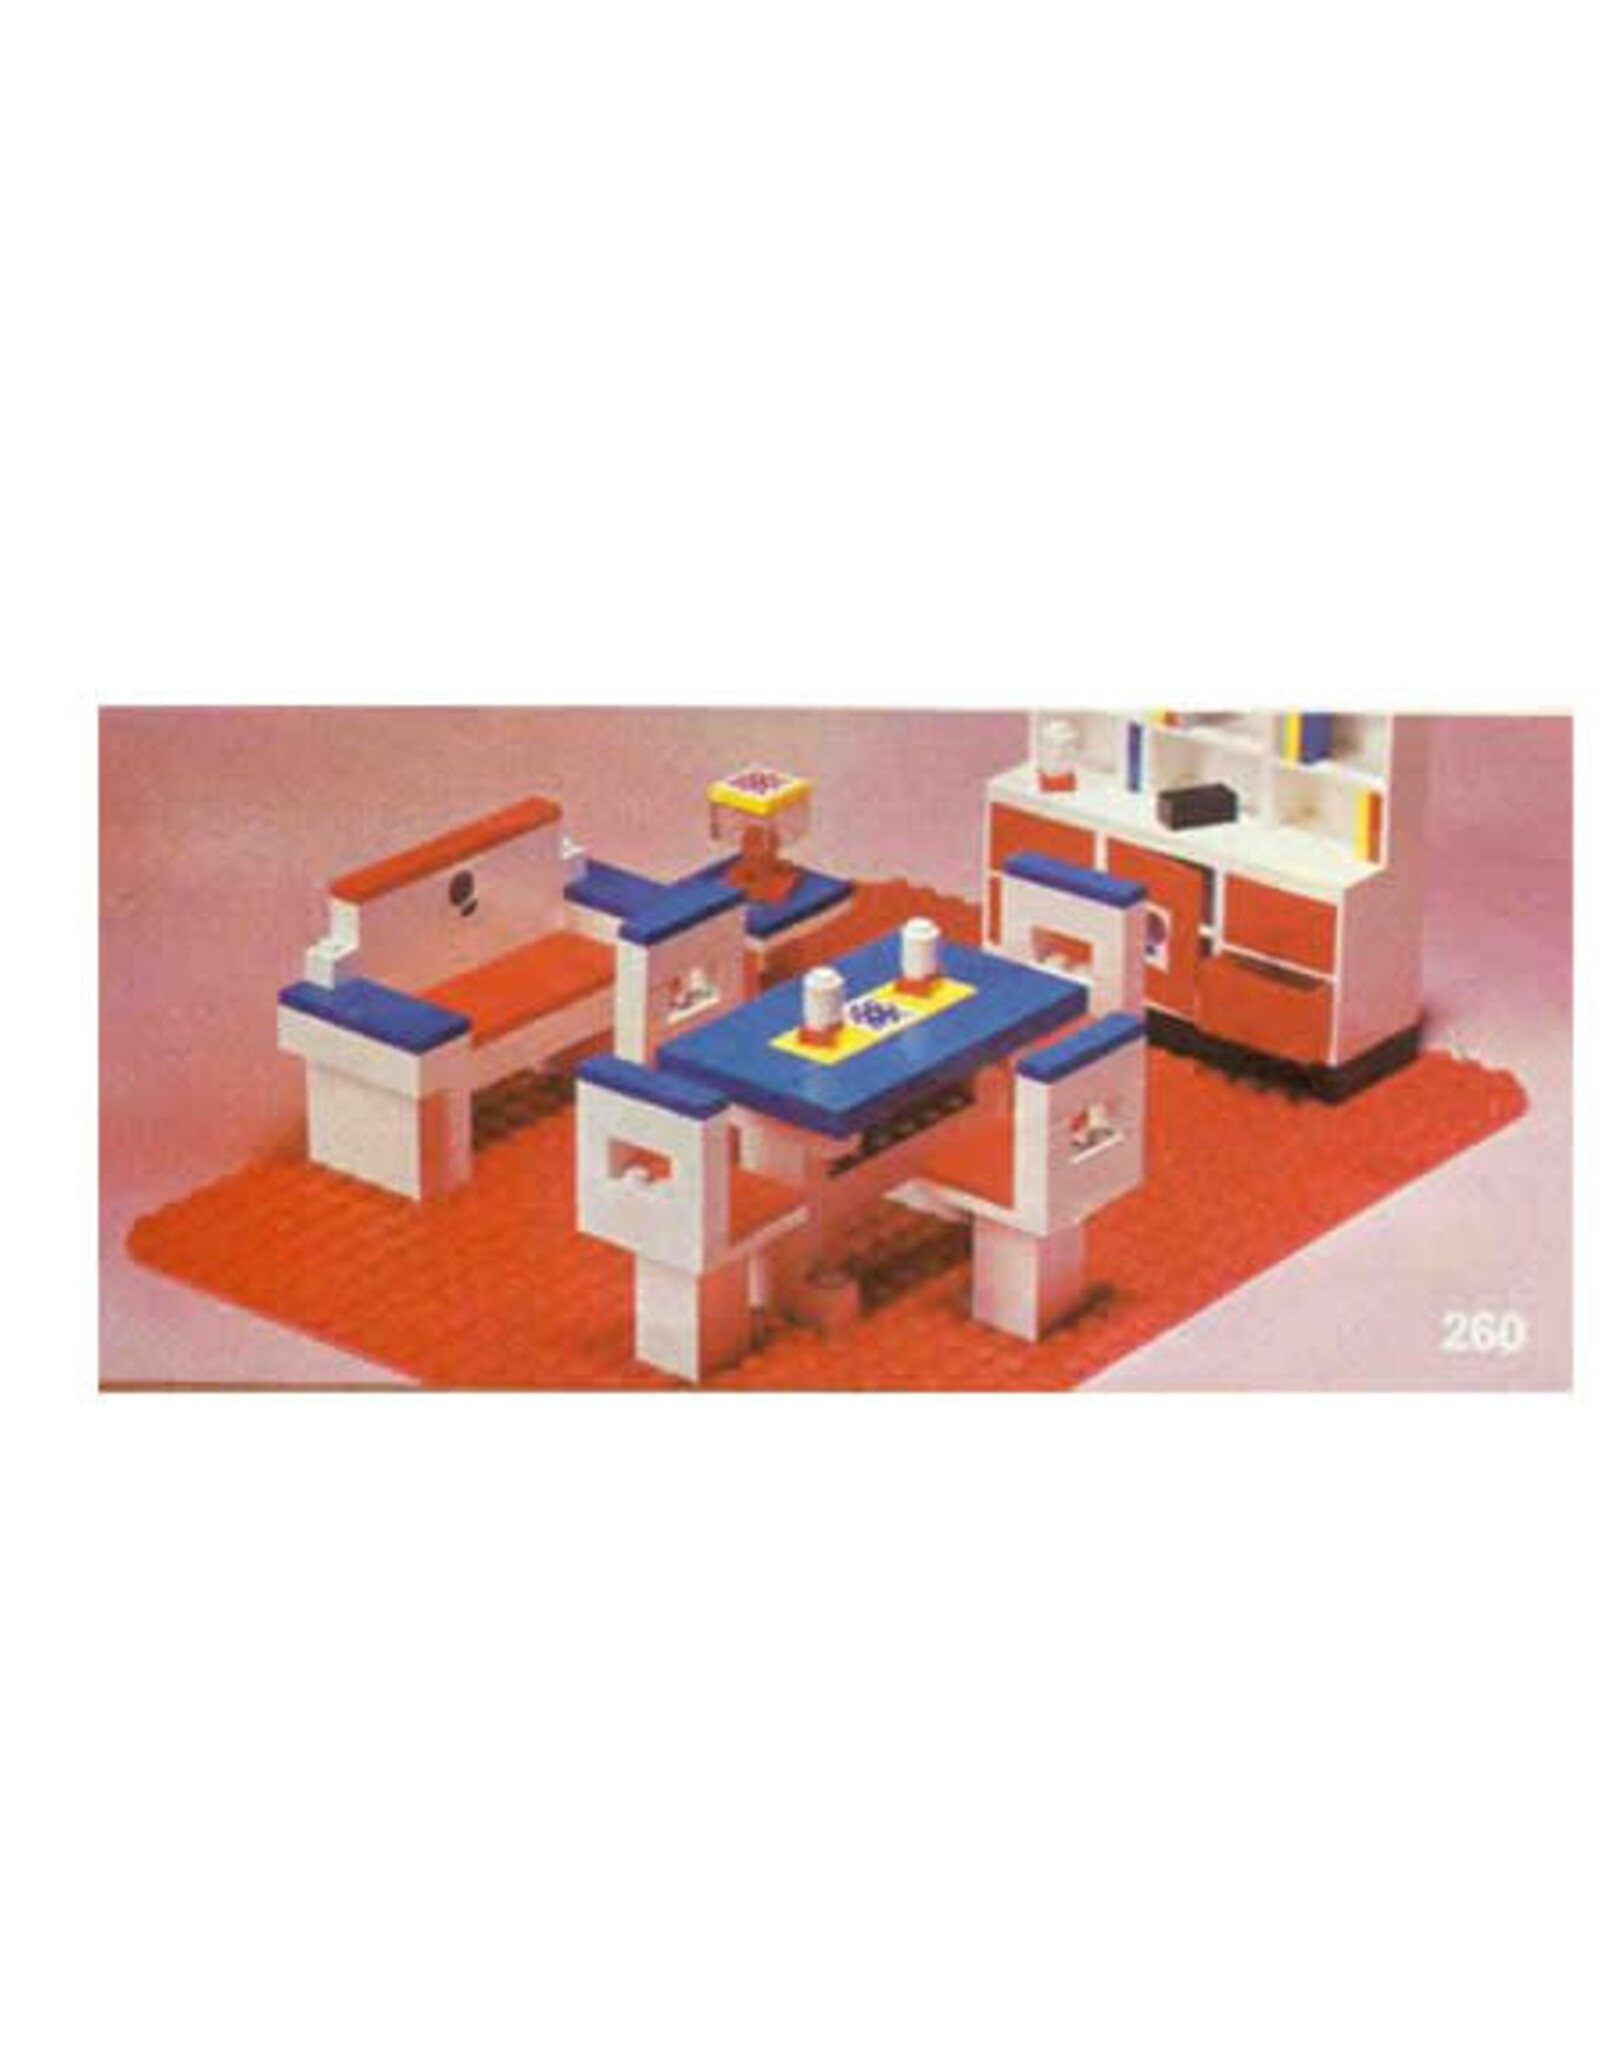 LEGO LEGO 260 Complete Living Room Set LEGOSYSTEM